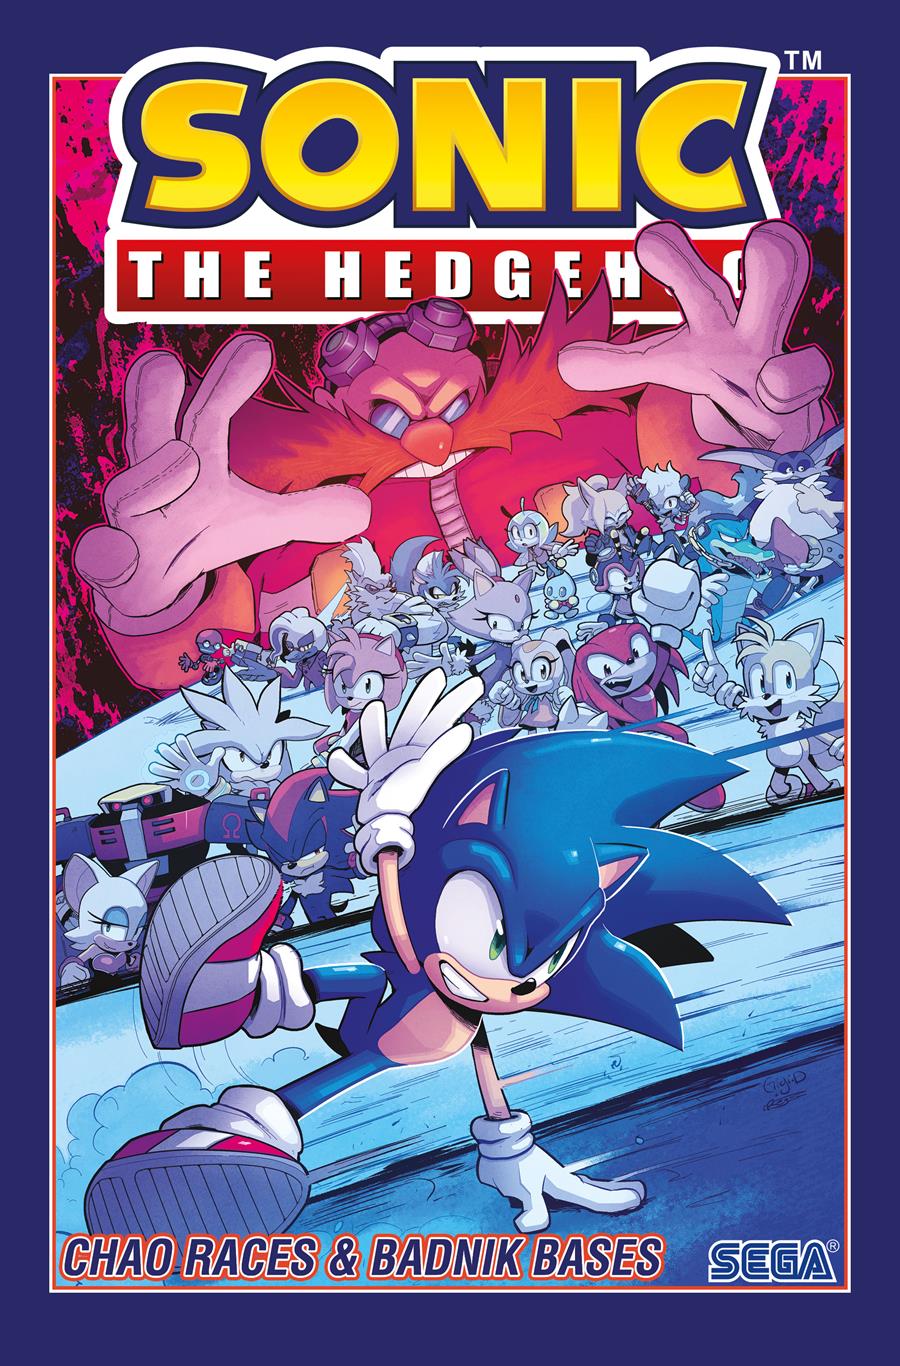 Sonic The Hedgehog núm. 34 | N0522-ECC47 | Evan Stanley / Reggie Graham | Terra de Còmic - Tu tienda de cómics online especializada en cómics, manga y merchandising